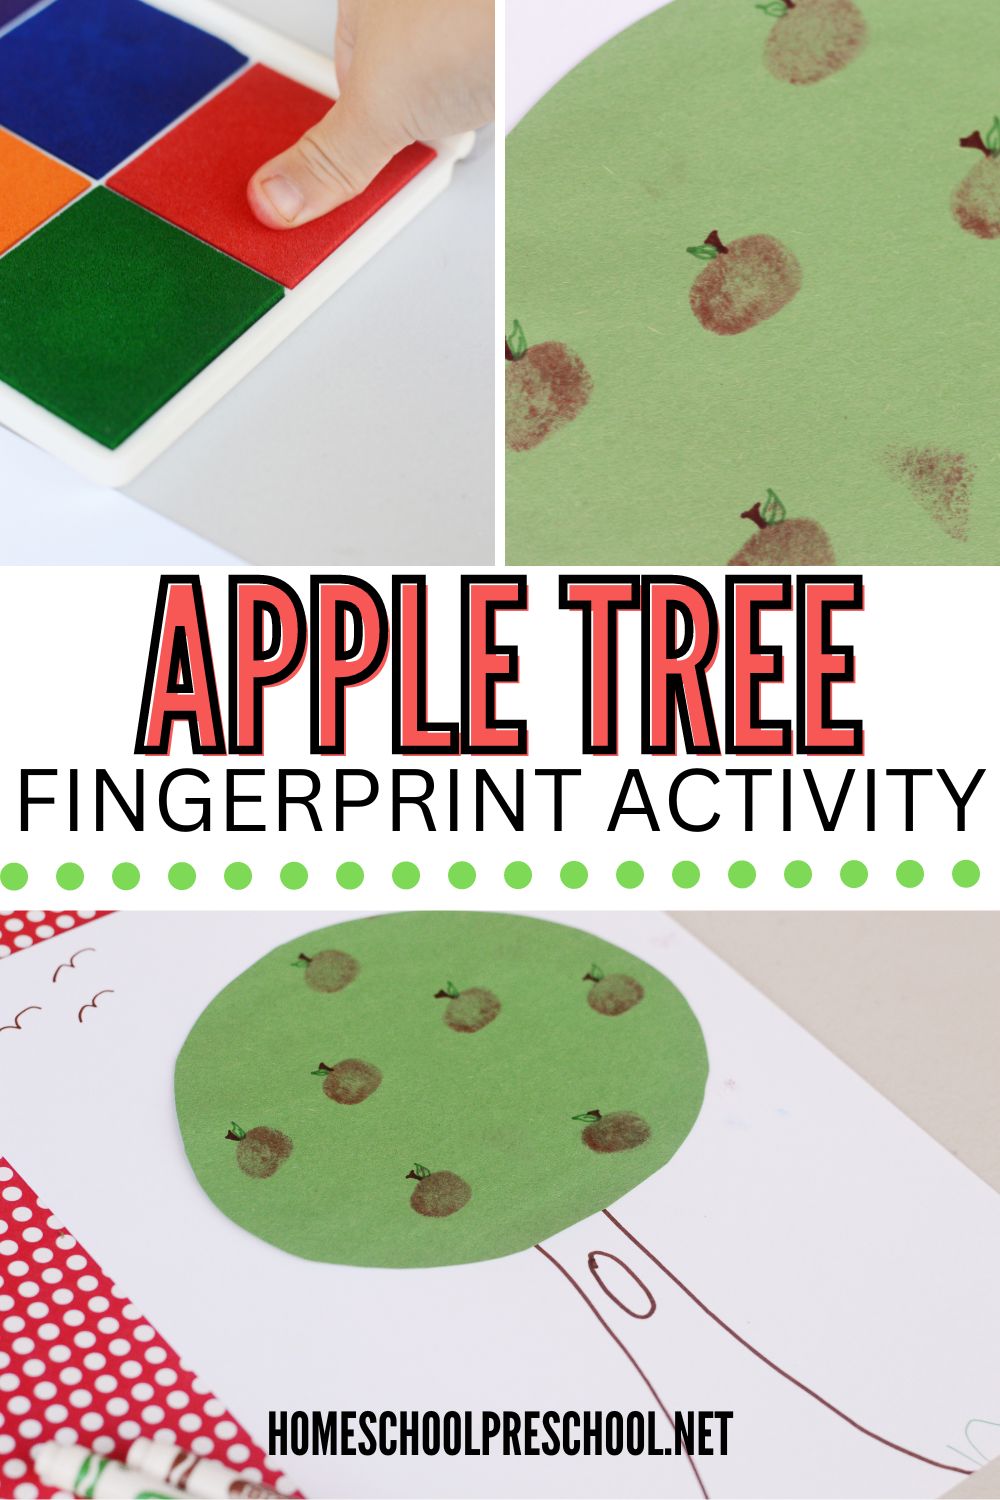 fingerprint-crafts-for-preschoolers Fingerprint Apple Tree